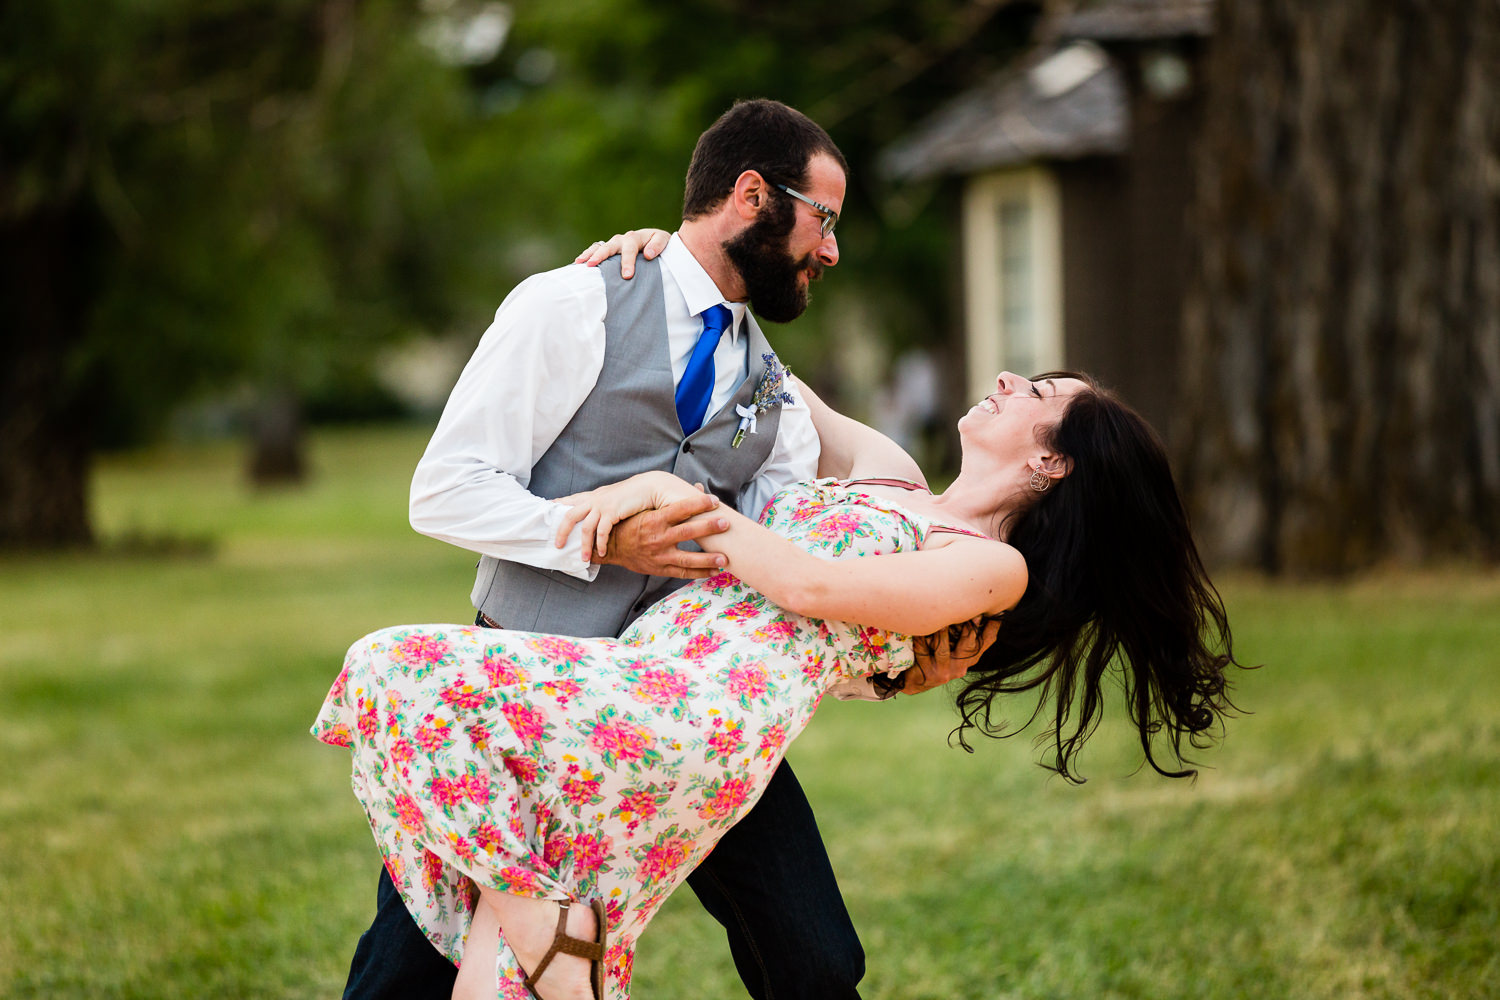 bozeman-montana-wedding-groomsman-dances-with-girlfriend.jpg